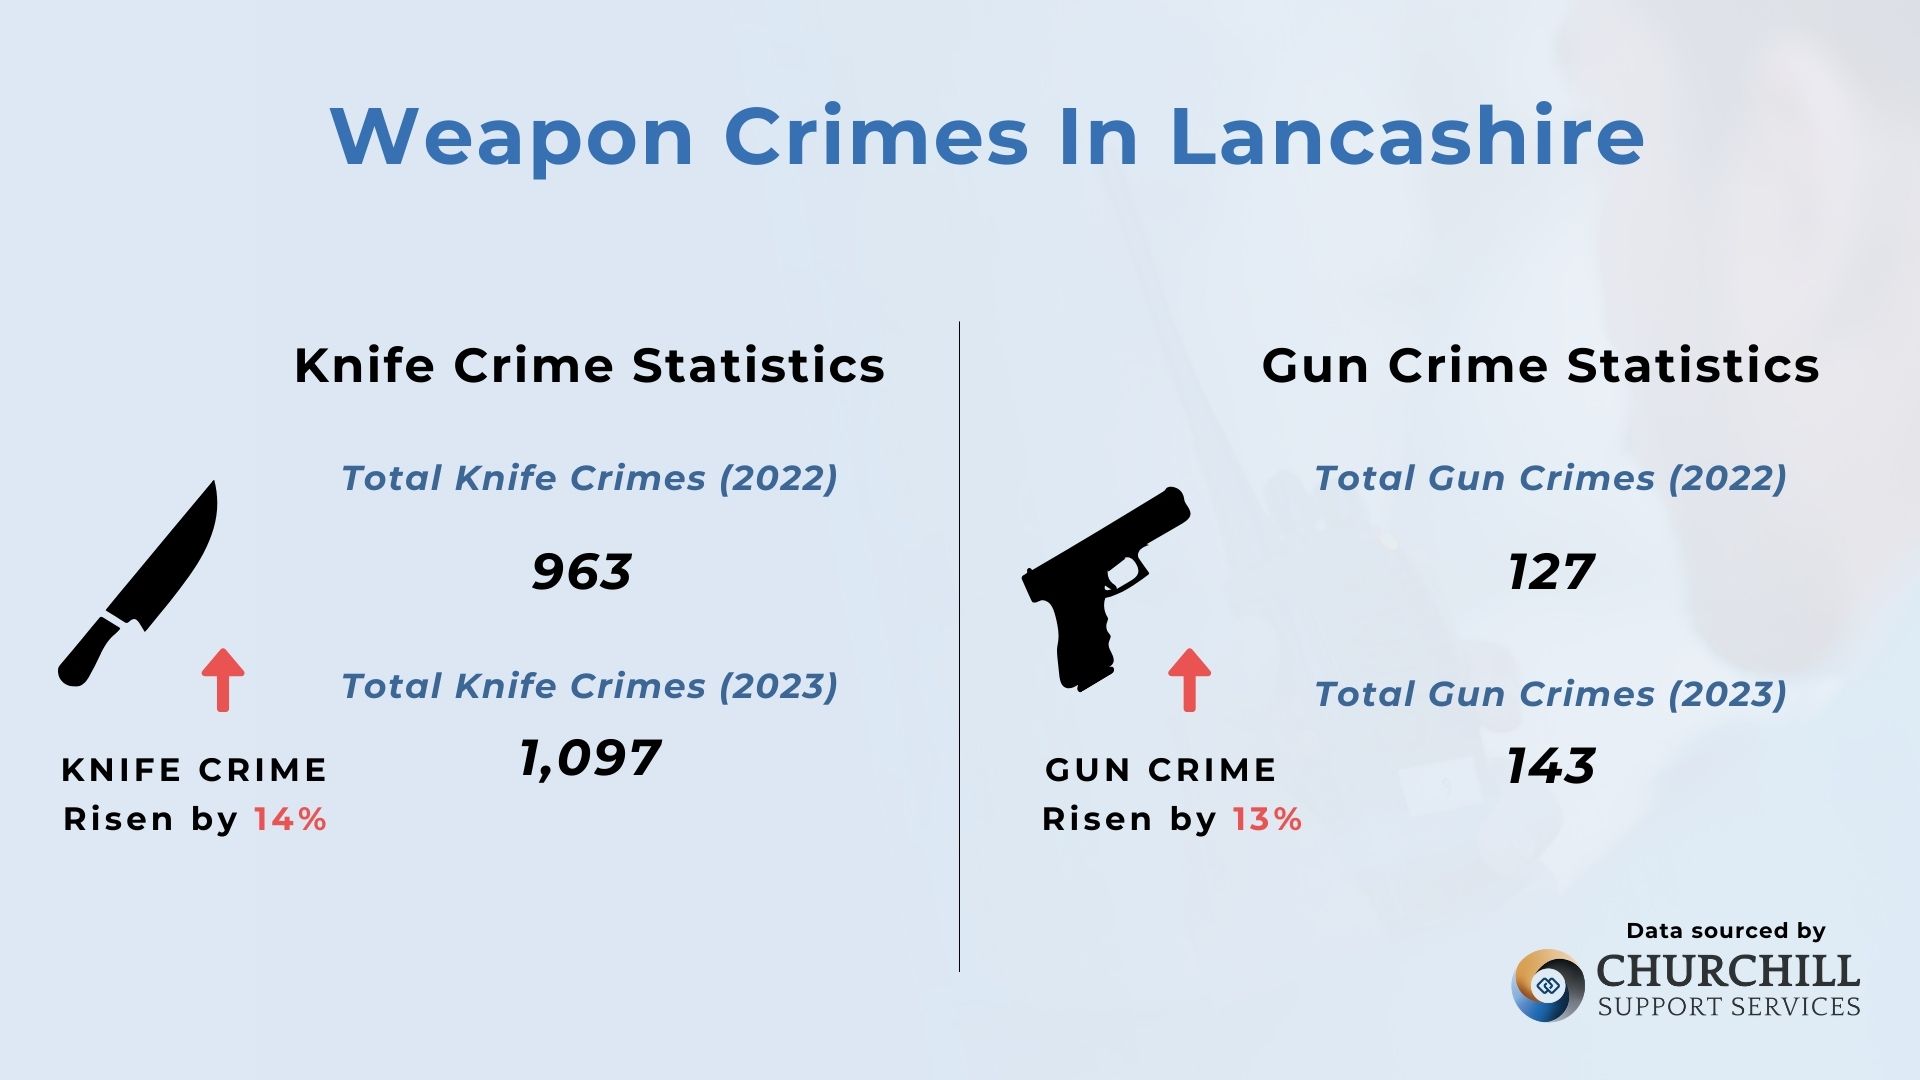 Key Weapon Crime Statistics For Lancashire